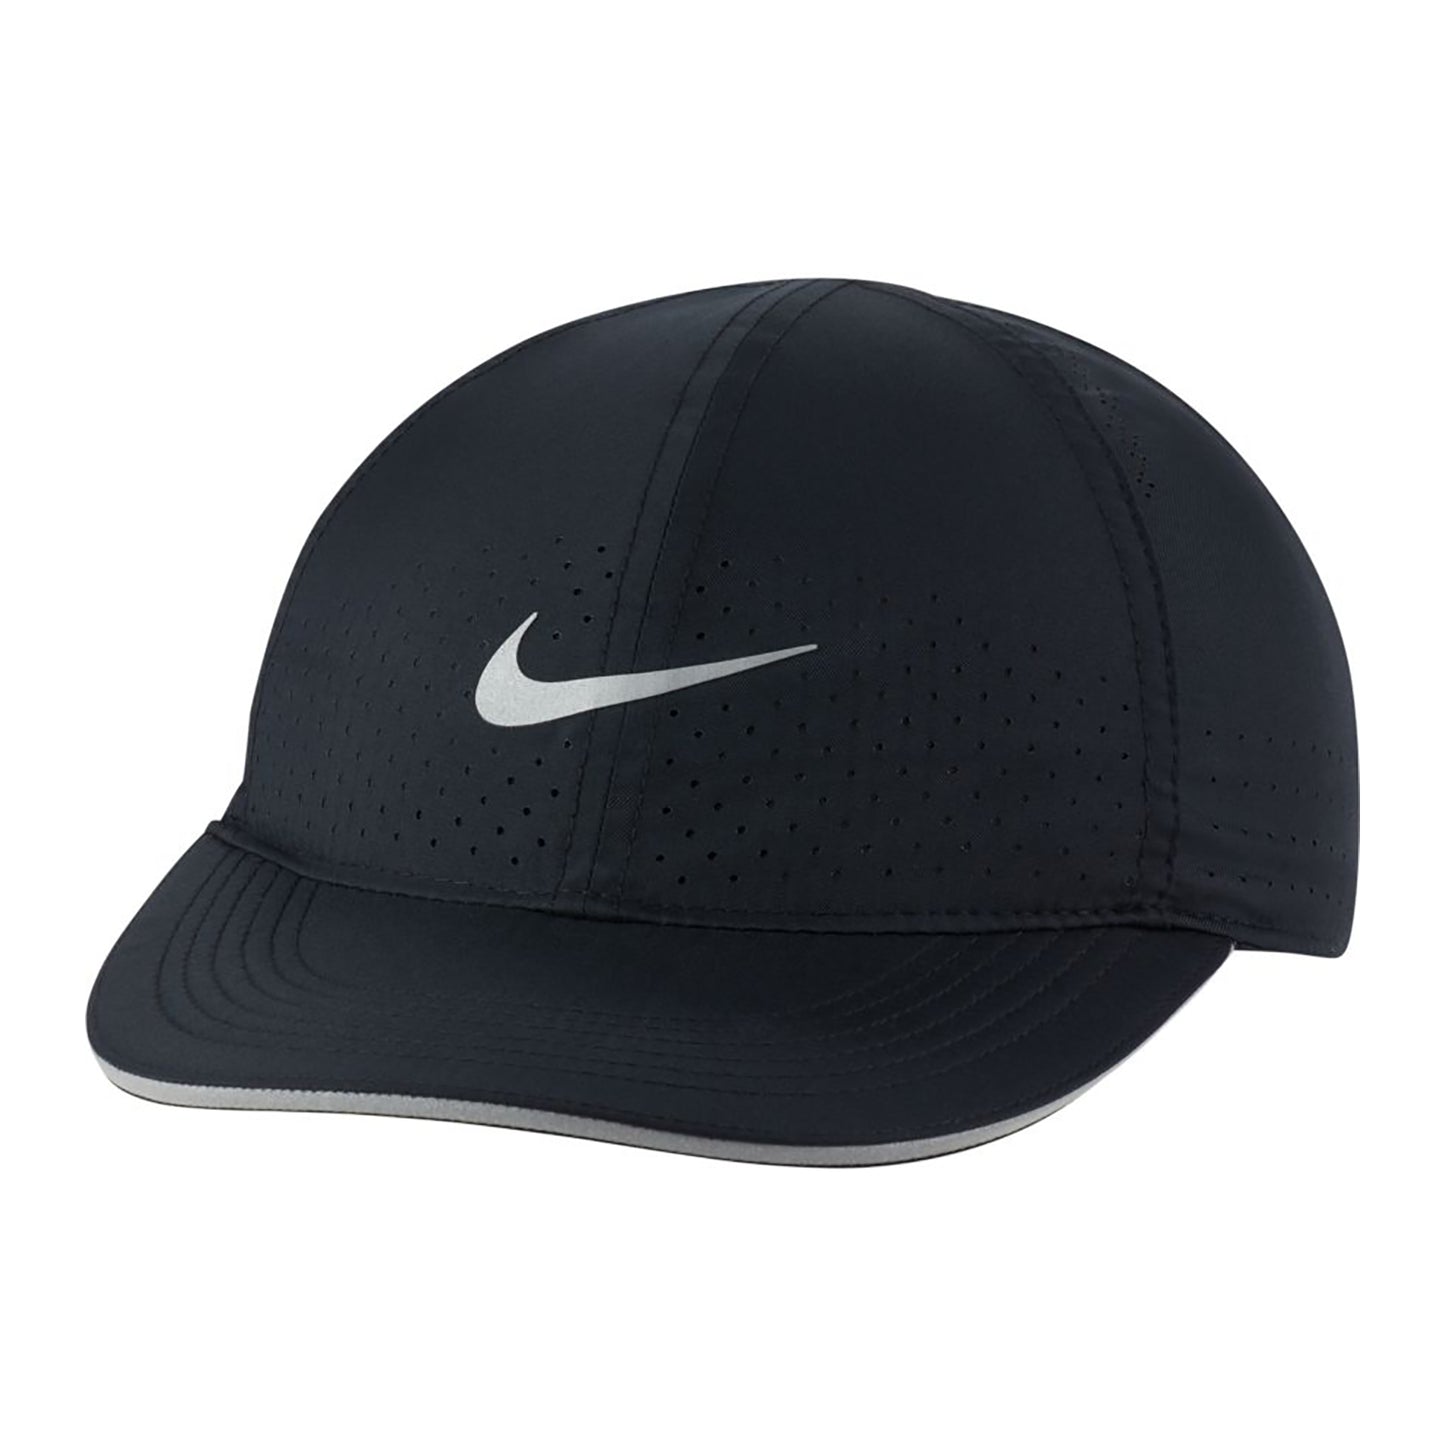 Women's Nike Featherlight Running Cap - Black